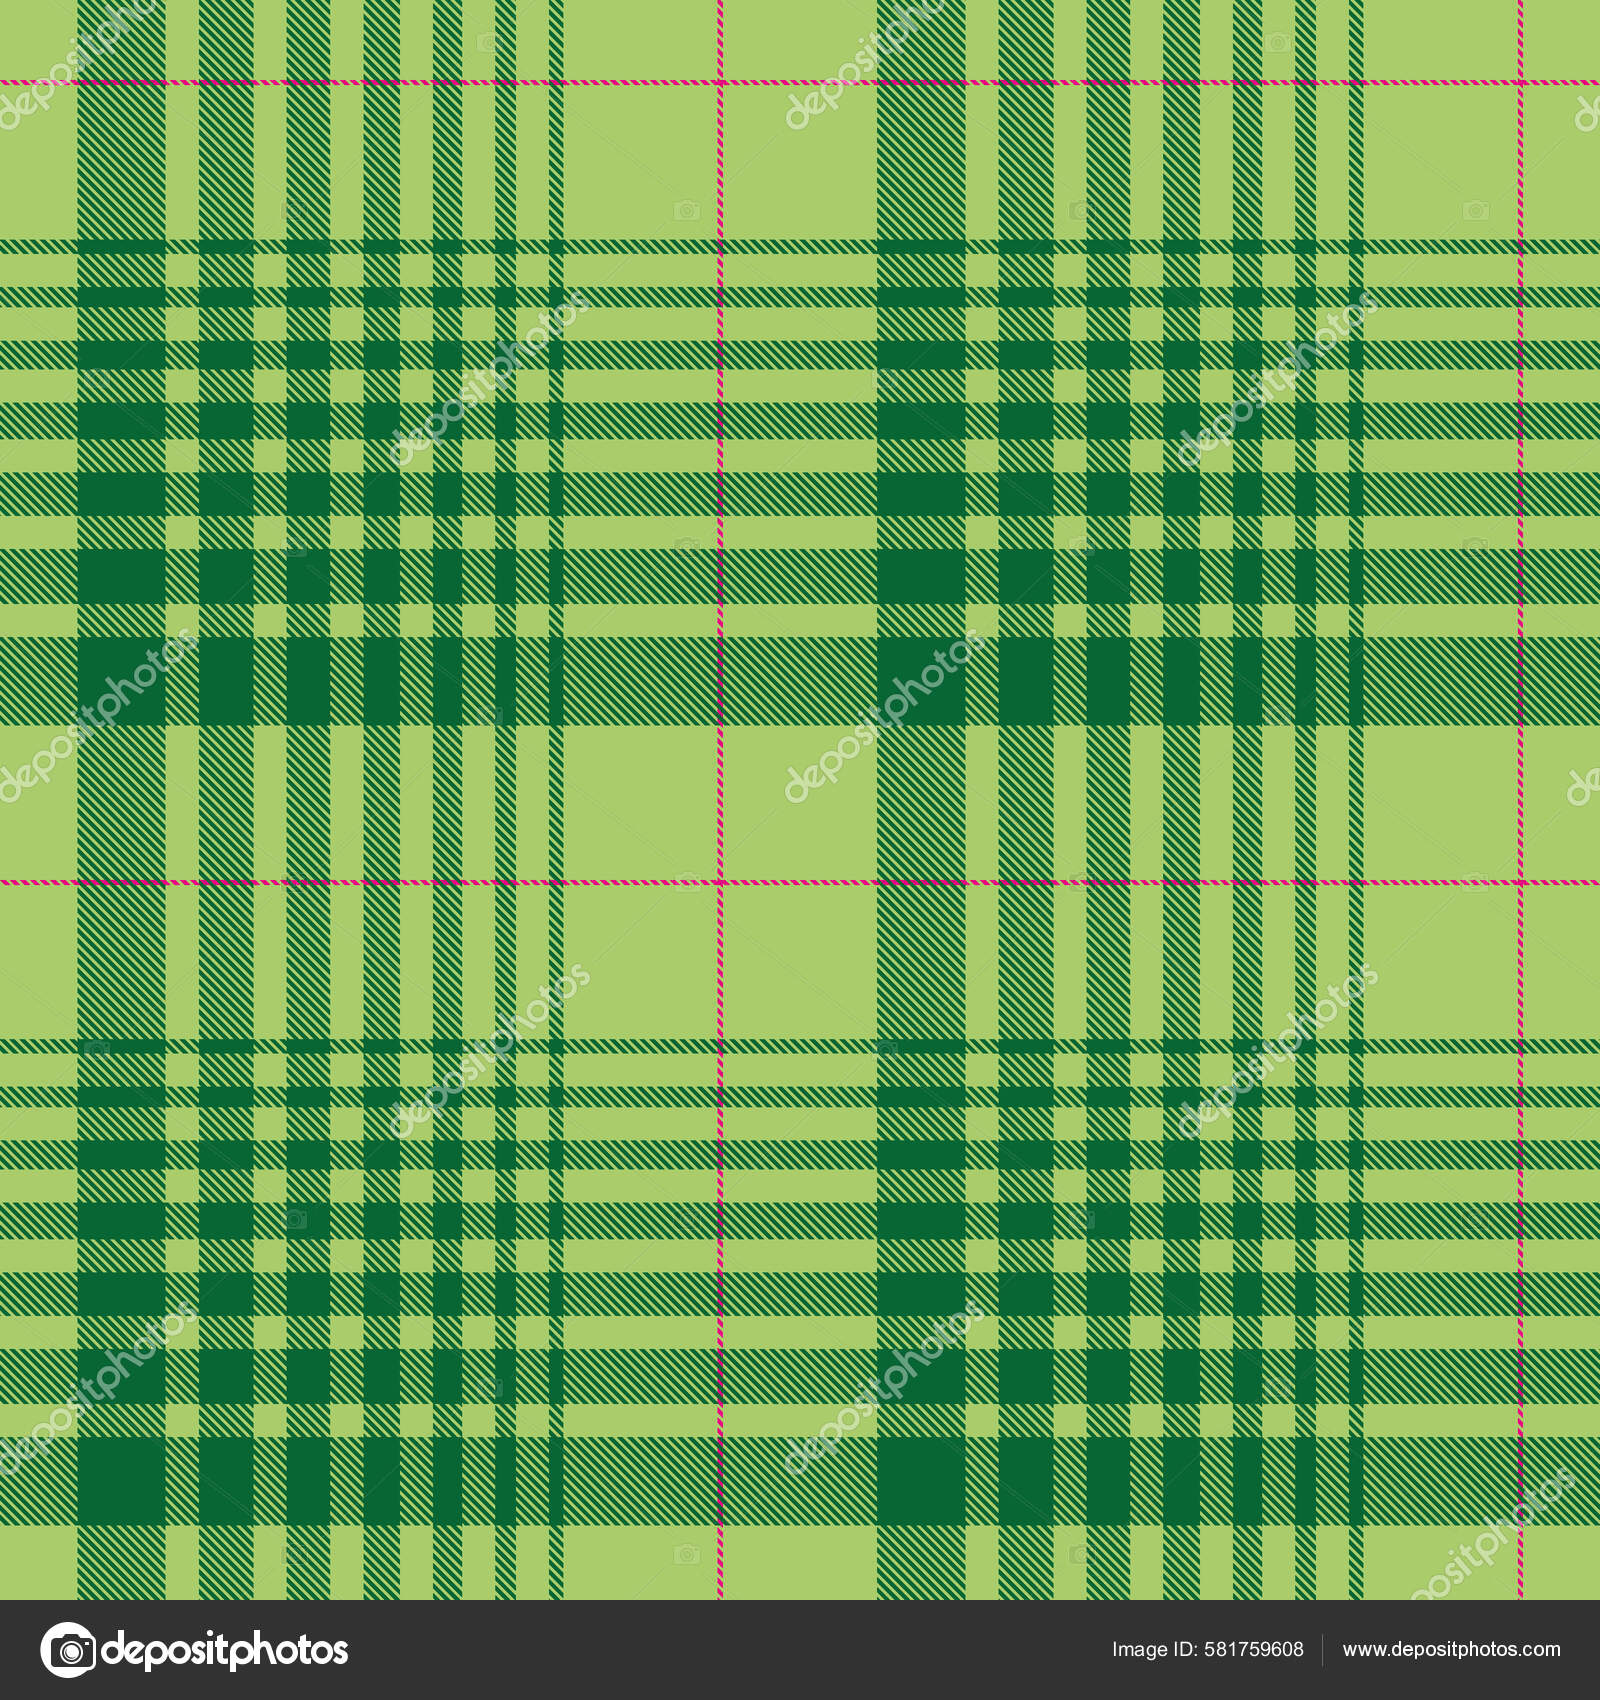 Tartan plaid pattern background. Seamless multicolored dark check